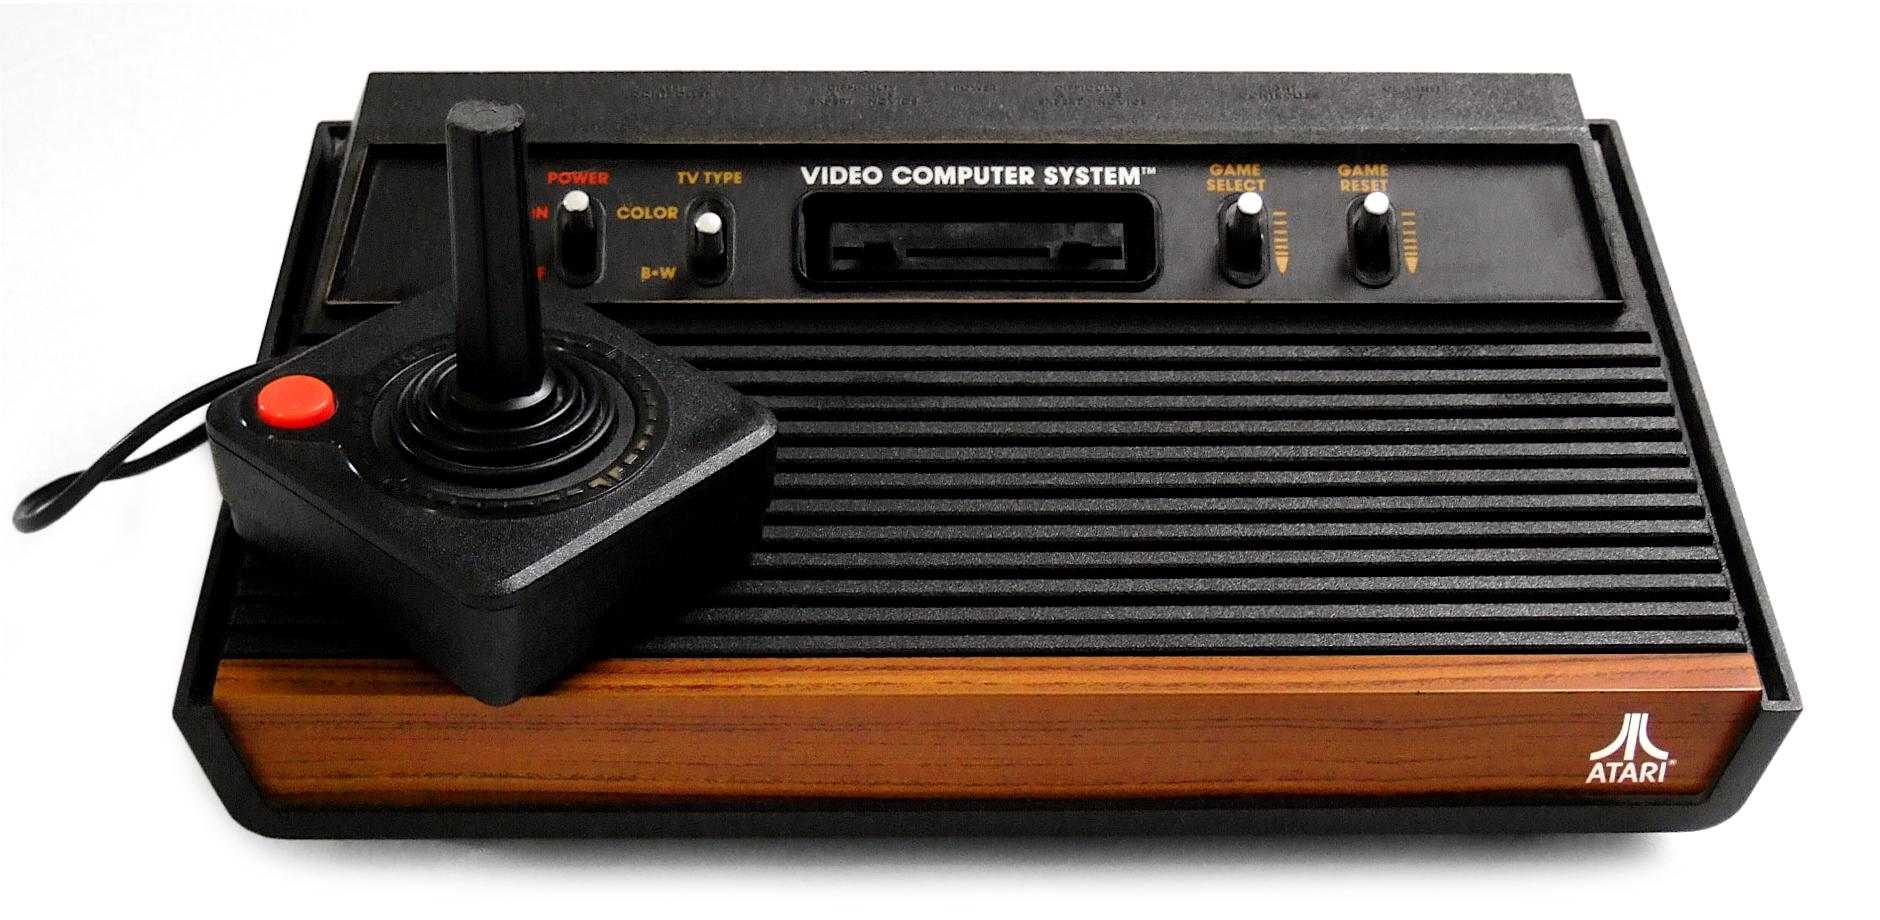 Atari, o console mais popular dos anos 80